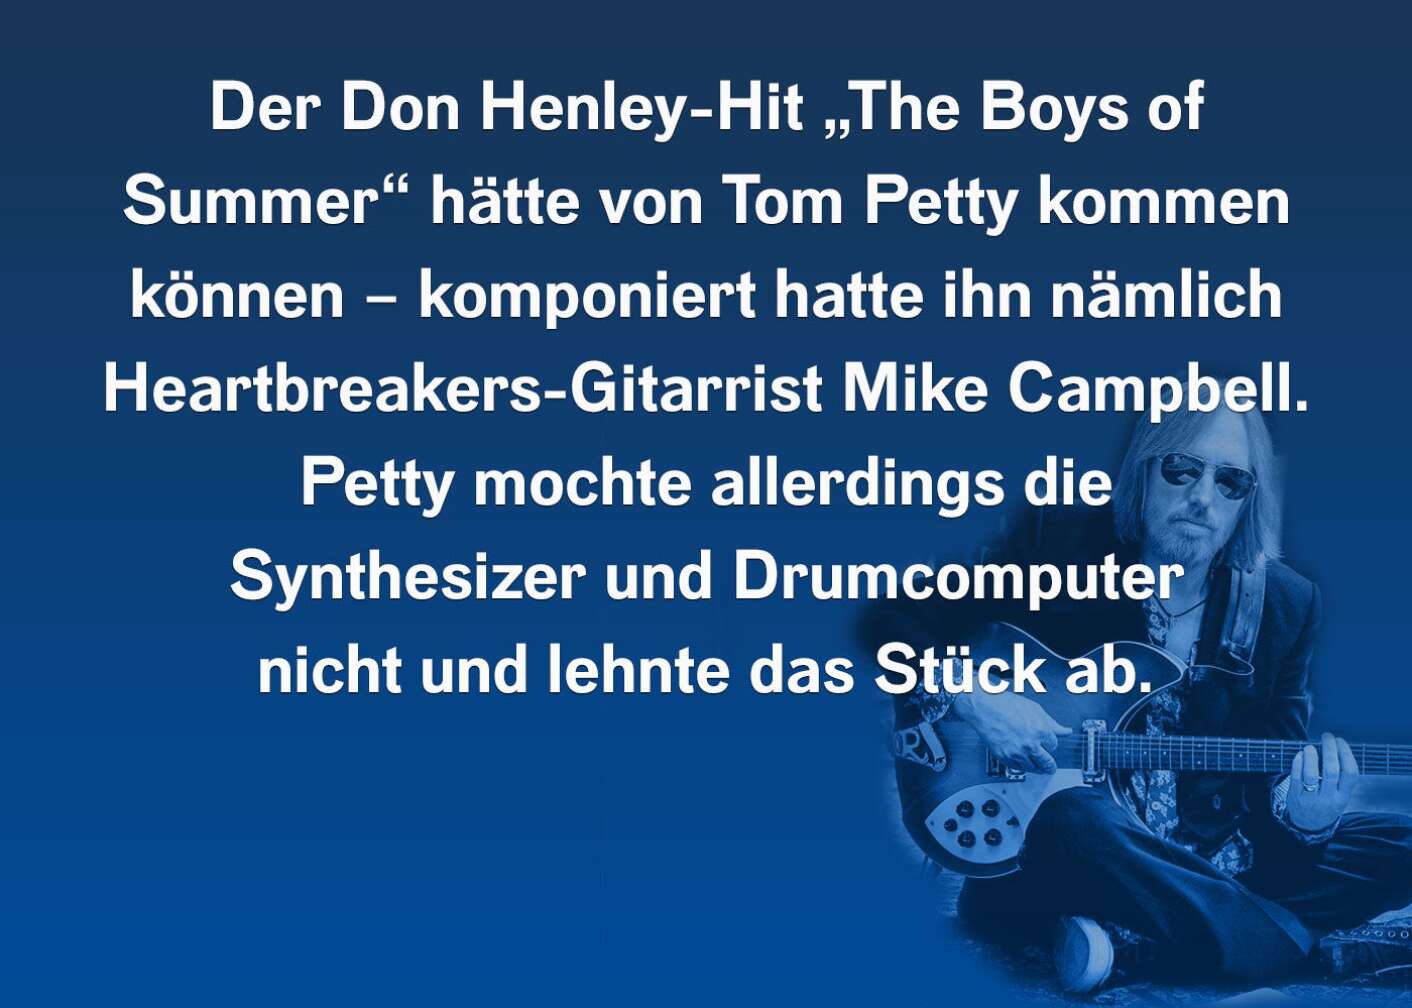 10 Fakten über Tom Petty